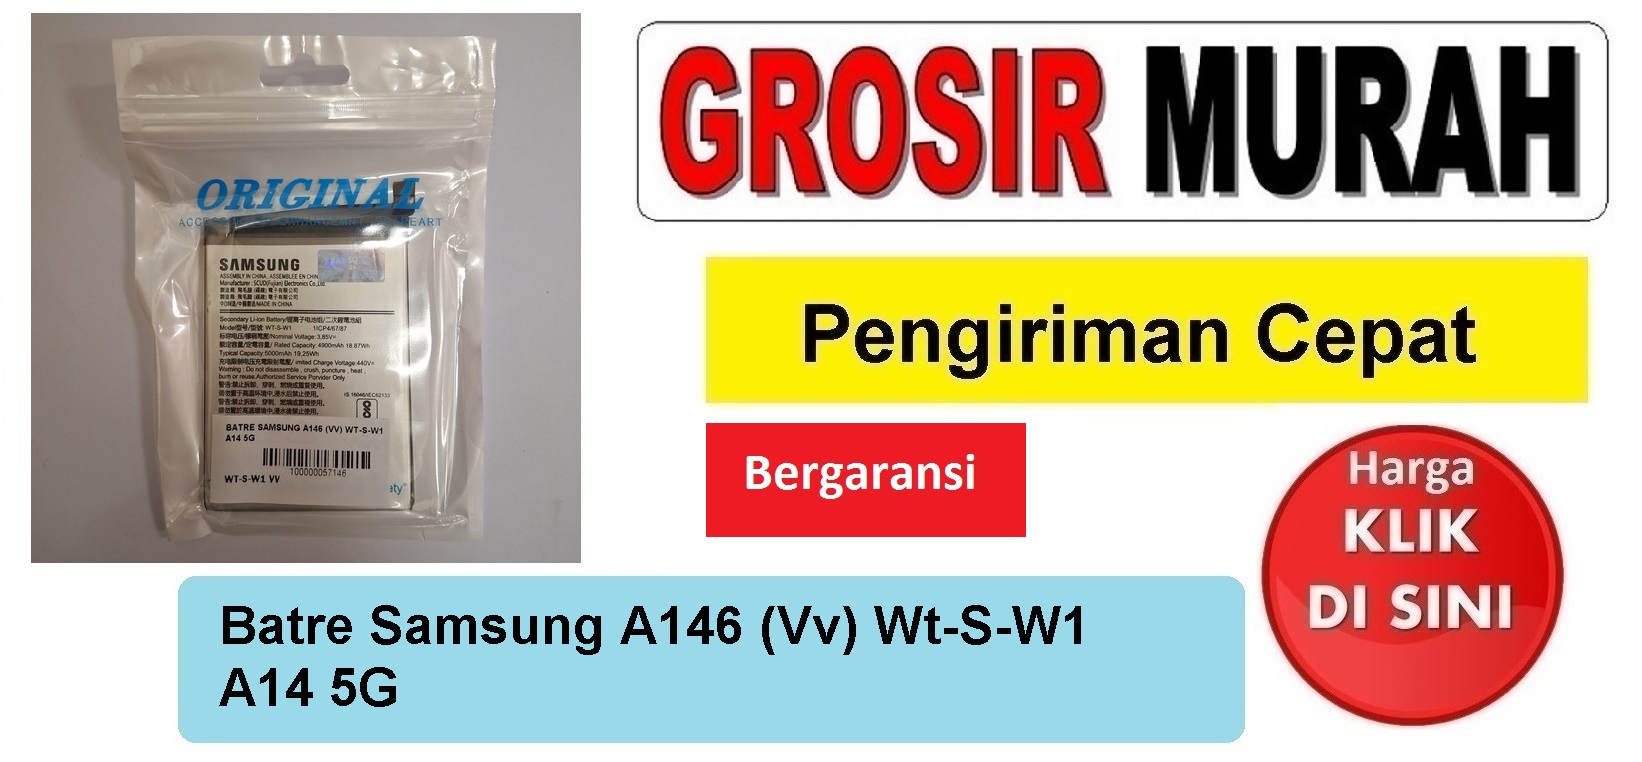 Batre Samsung A146 (Vv) Wt-S-W1 A14 5G Baterai Battery Bergaransi Batere